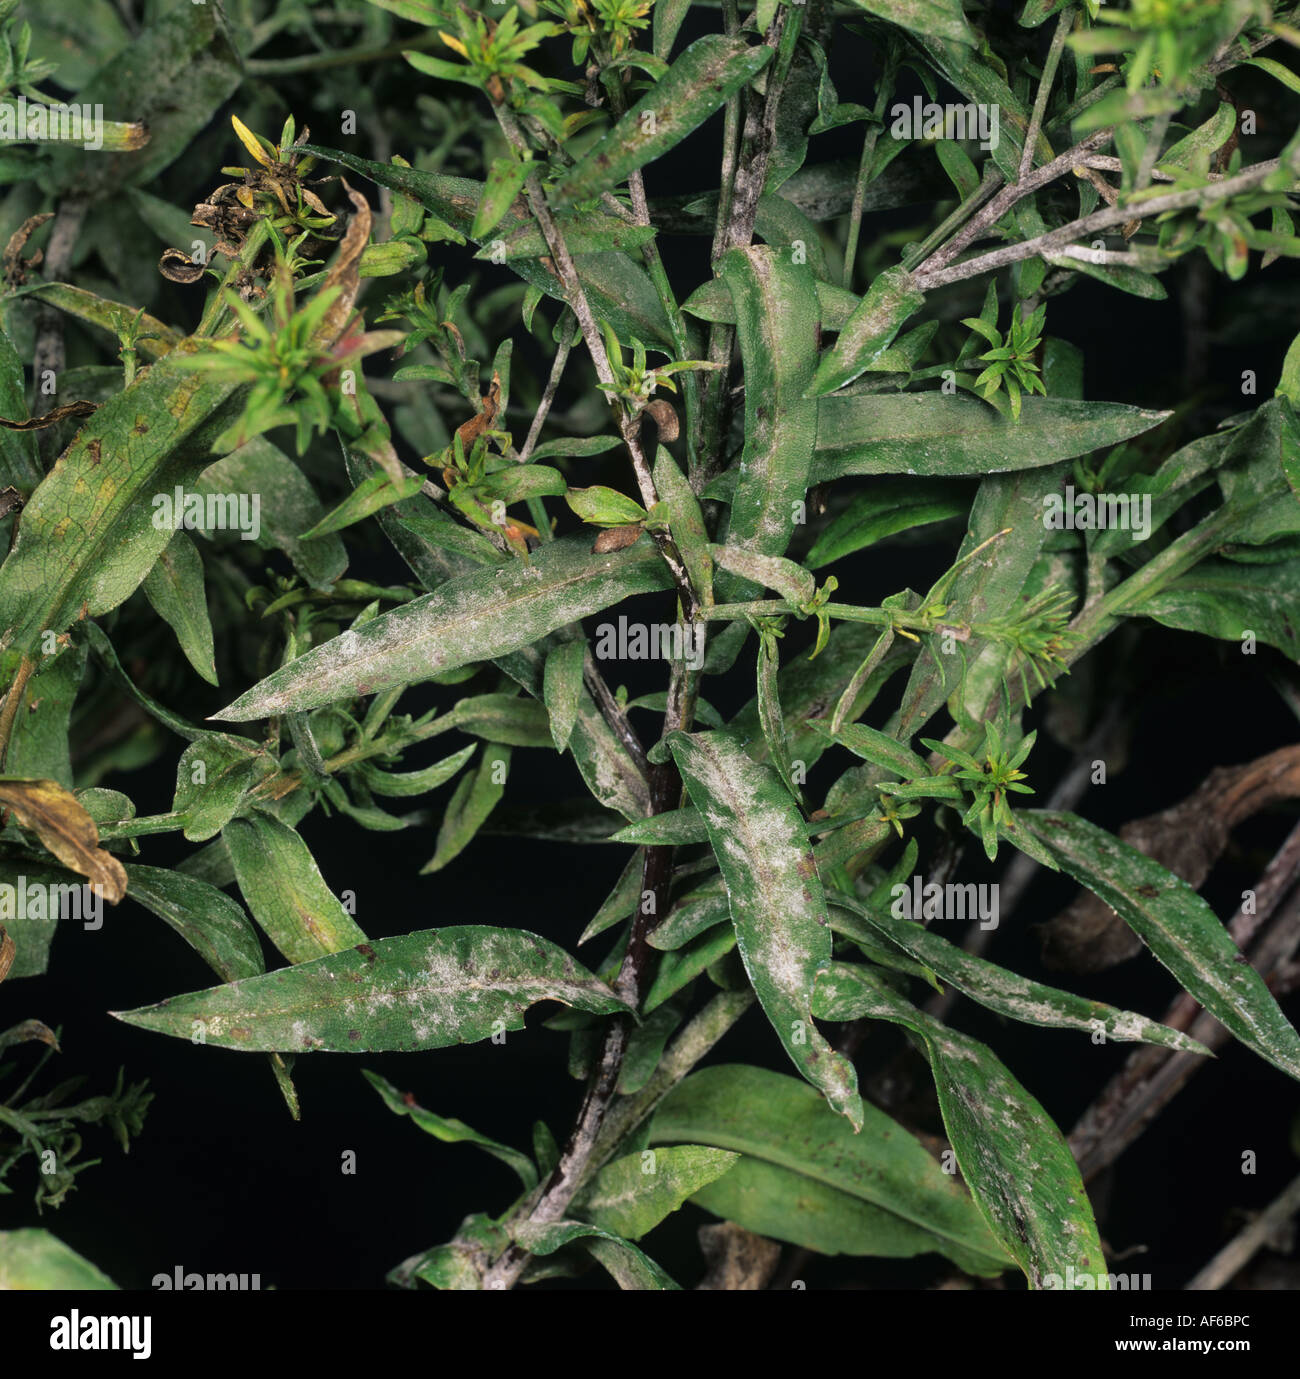 Powdery mildew Erysiphe cichoracearum on Aster novi belgii leaves Stock Photo